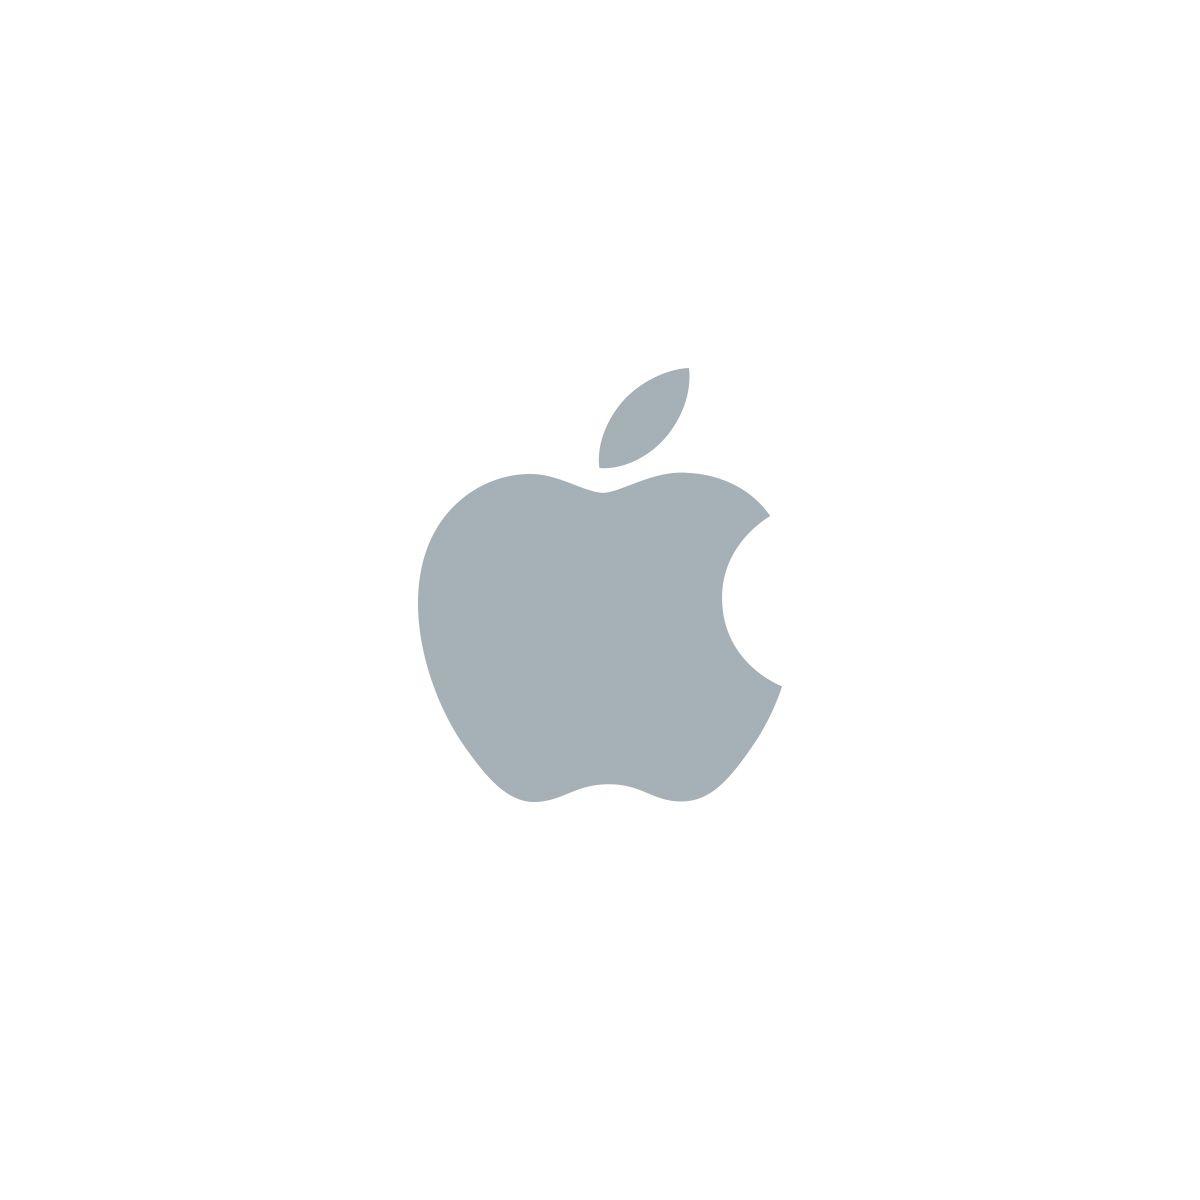 Windows App Store Logo - iTunes to Get iTunes Now